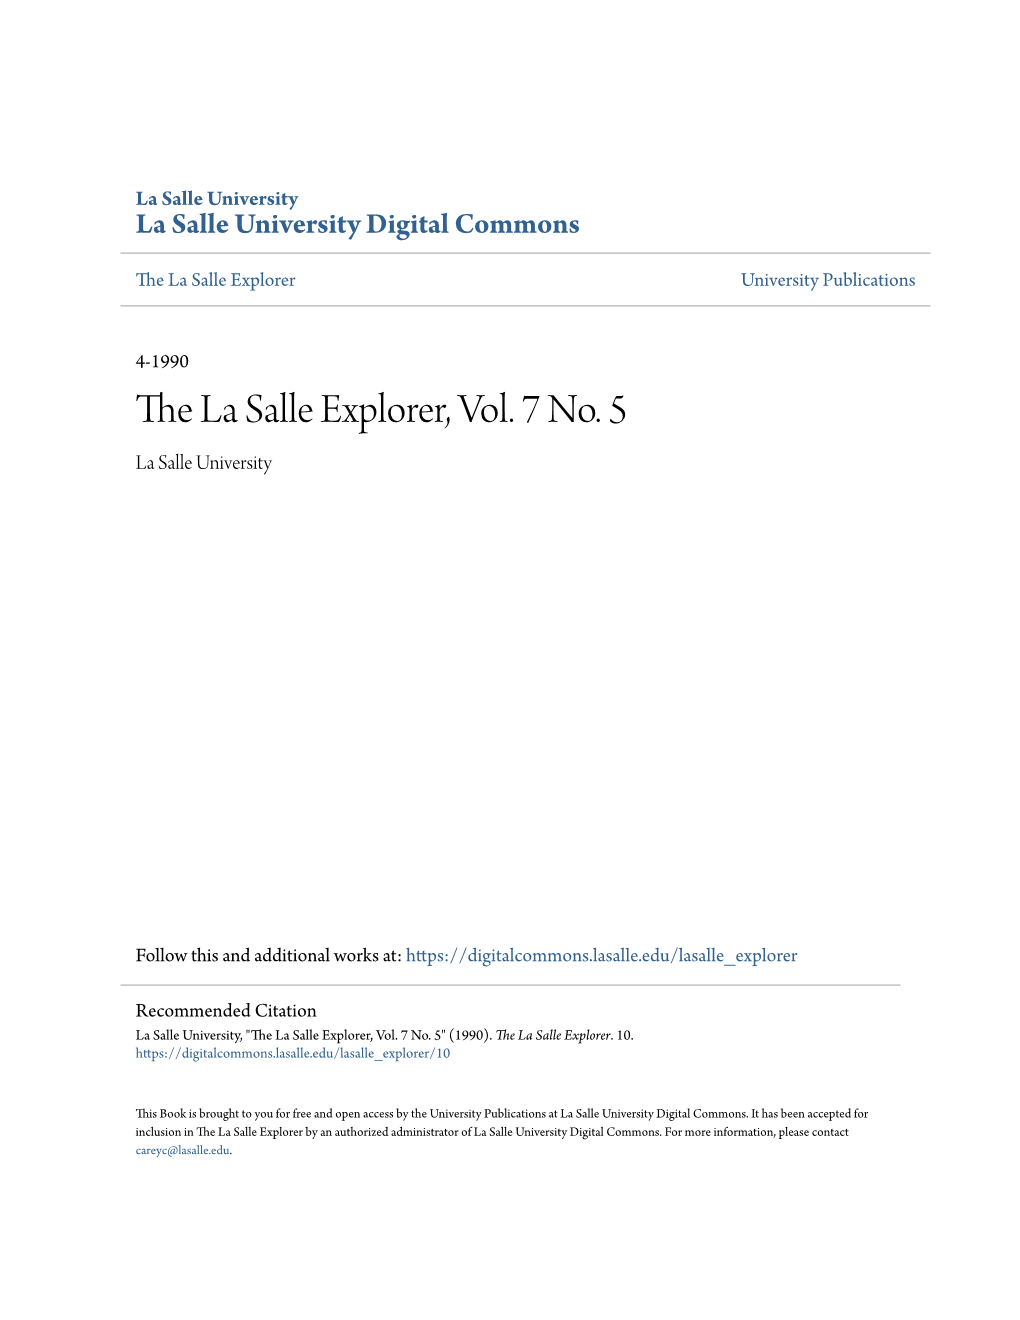 The La Salle Explorer, Vol. 7 No. 5 La Salle University